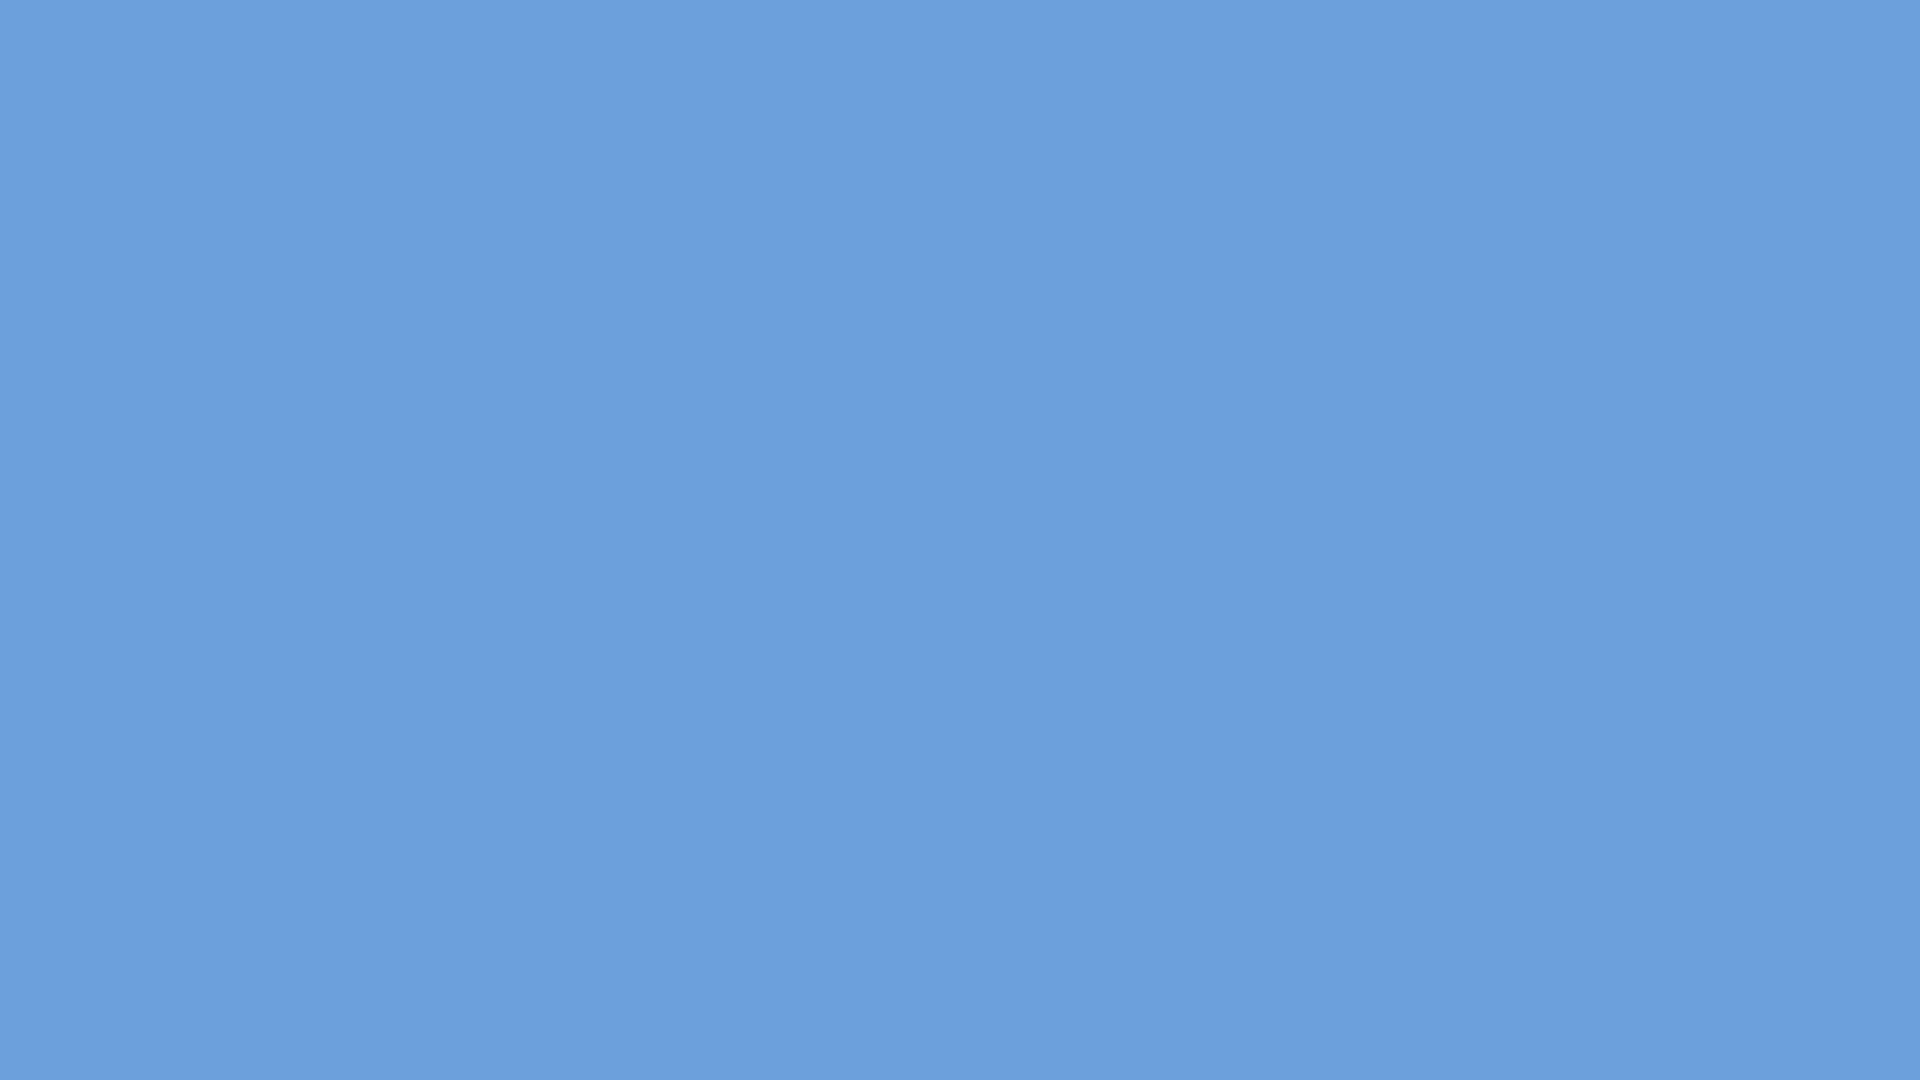 1920x1080 Little Boy Blue Solid Color Background